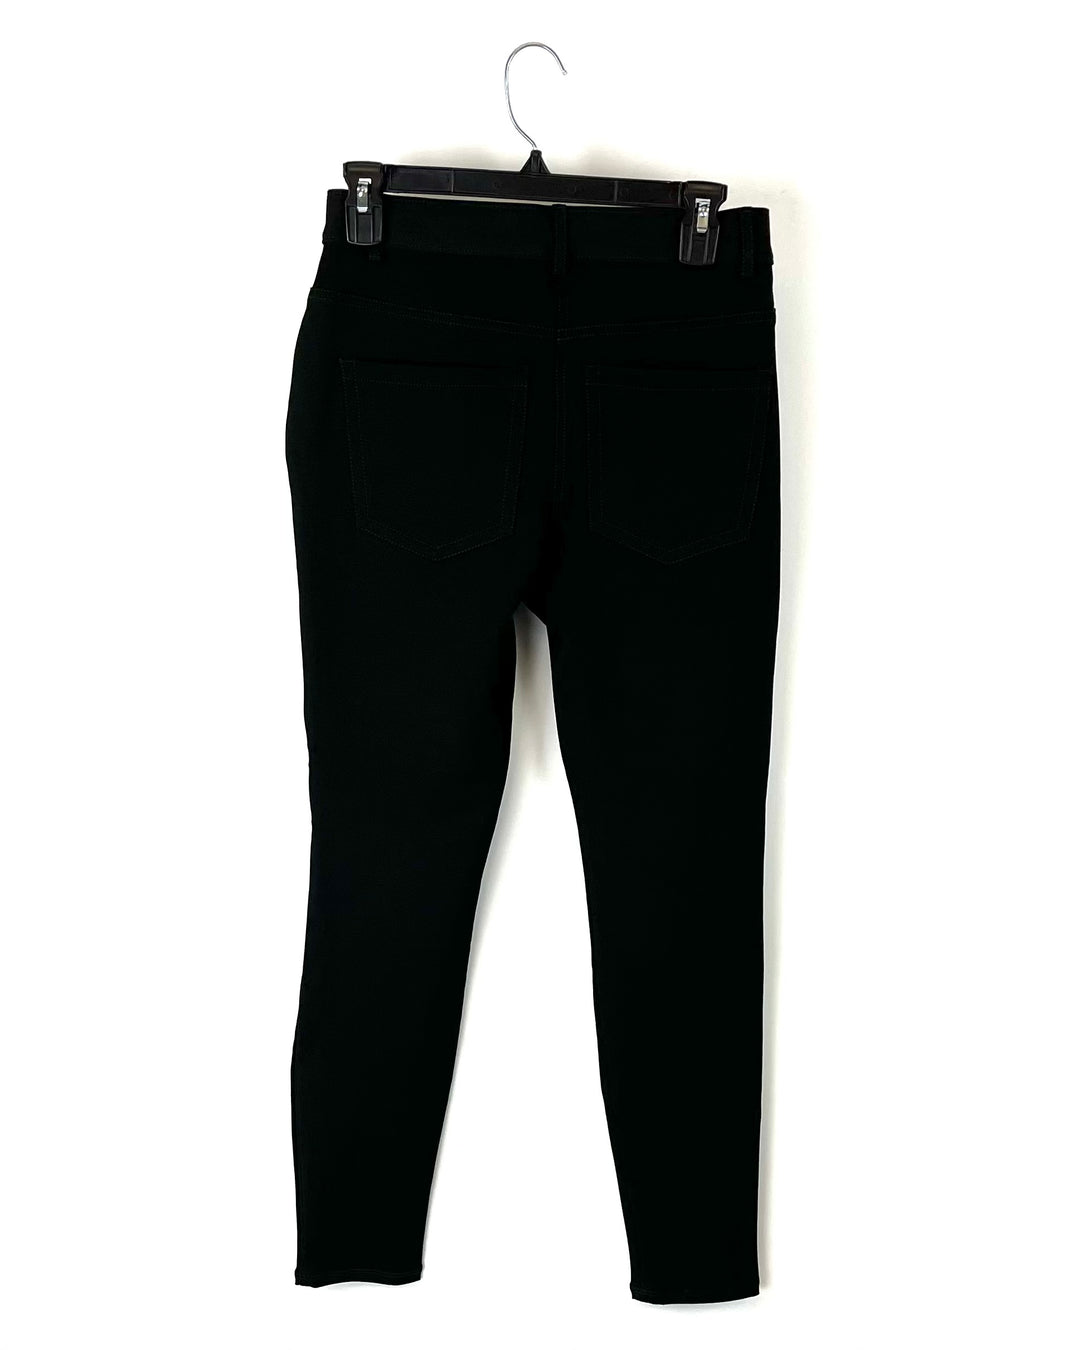 Black High Rise Pants - Size 4R